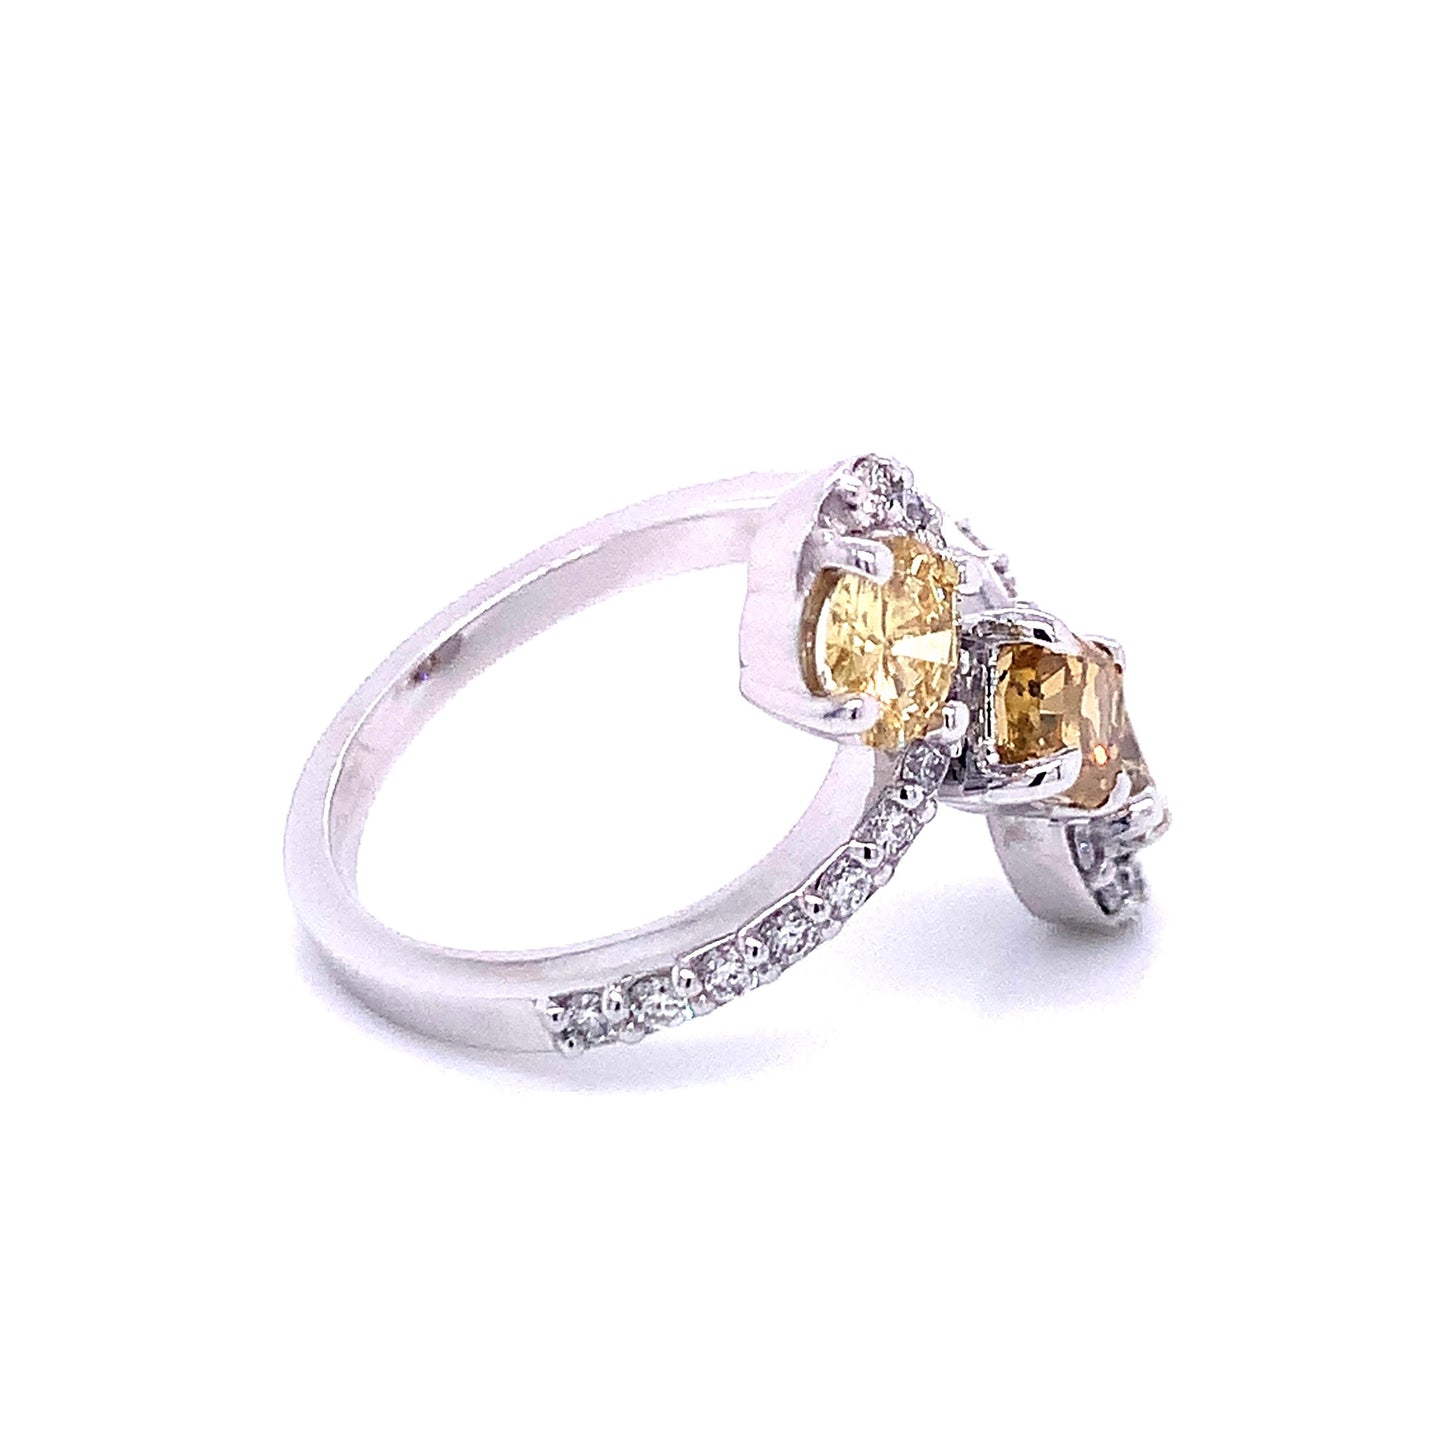 Unique Fancy Diamond Statement Ring in 18K White Gold